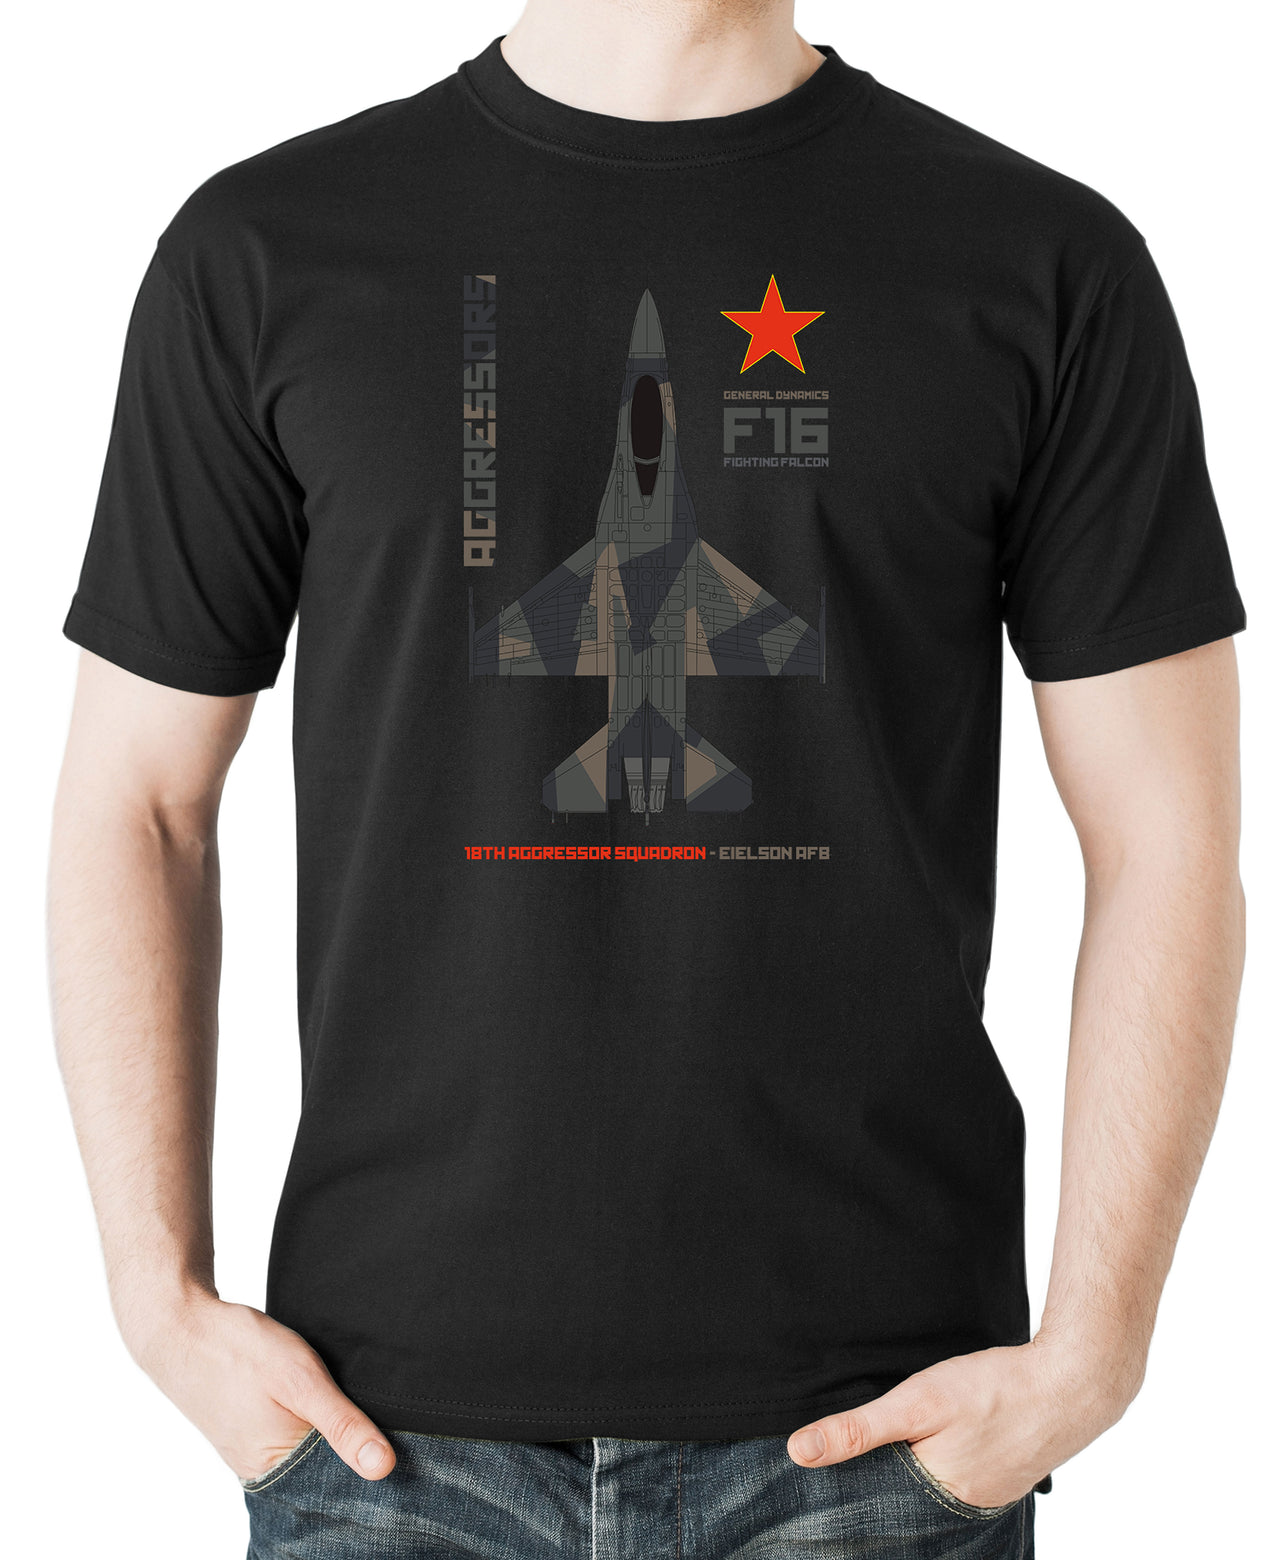 Aggressor F-16 Fighting Falcon - T-shirt